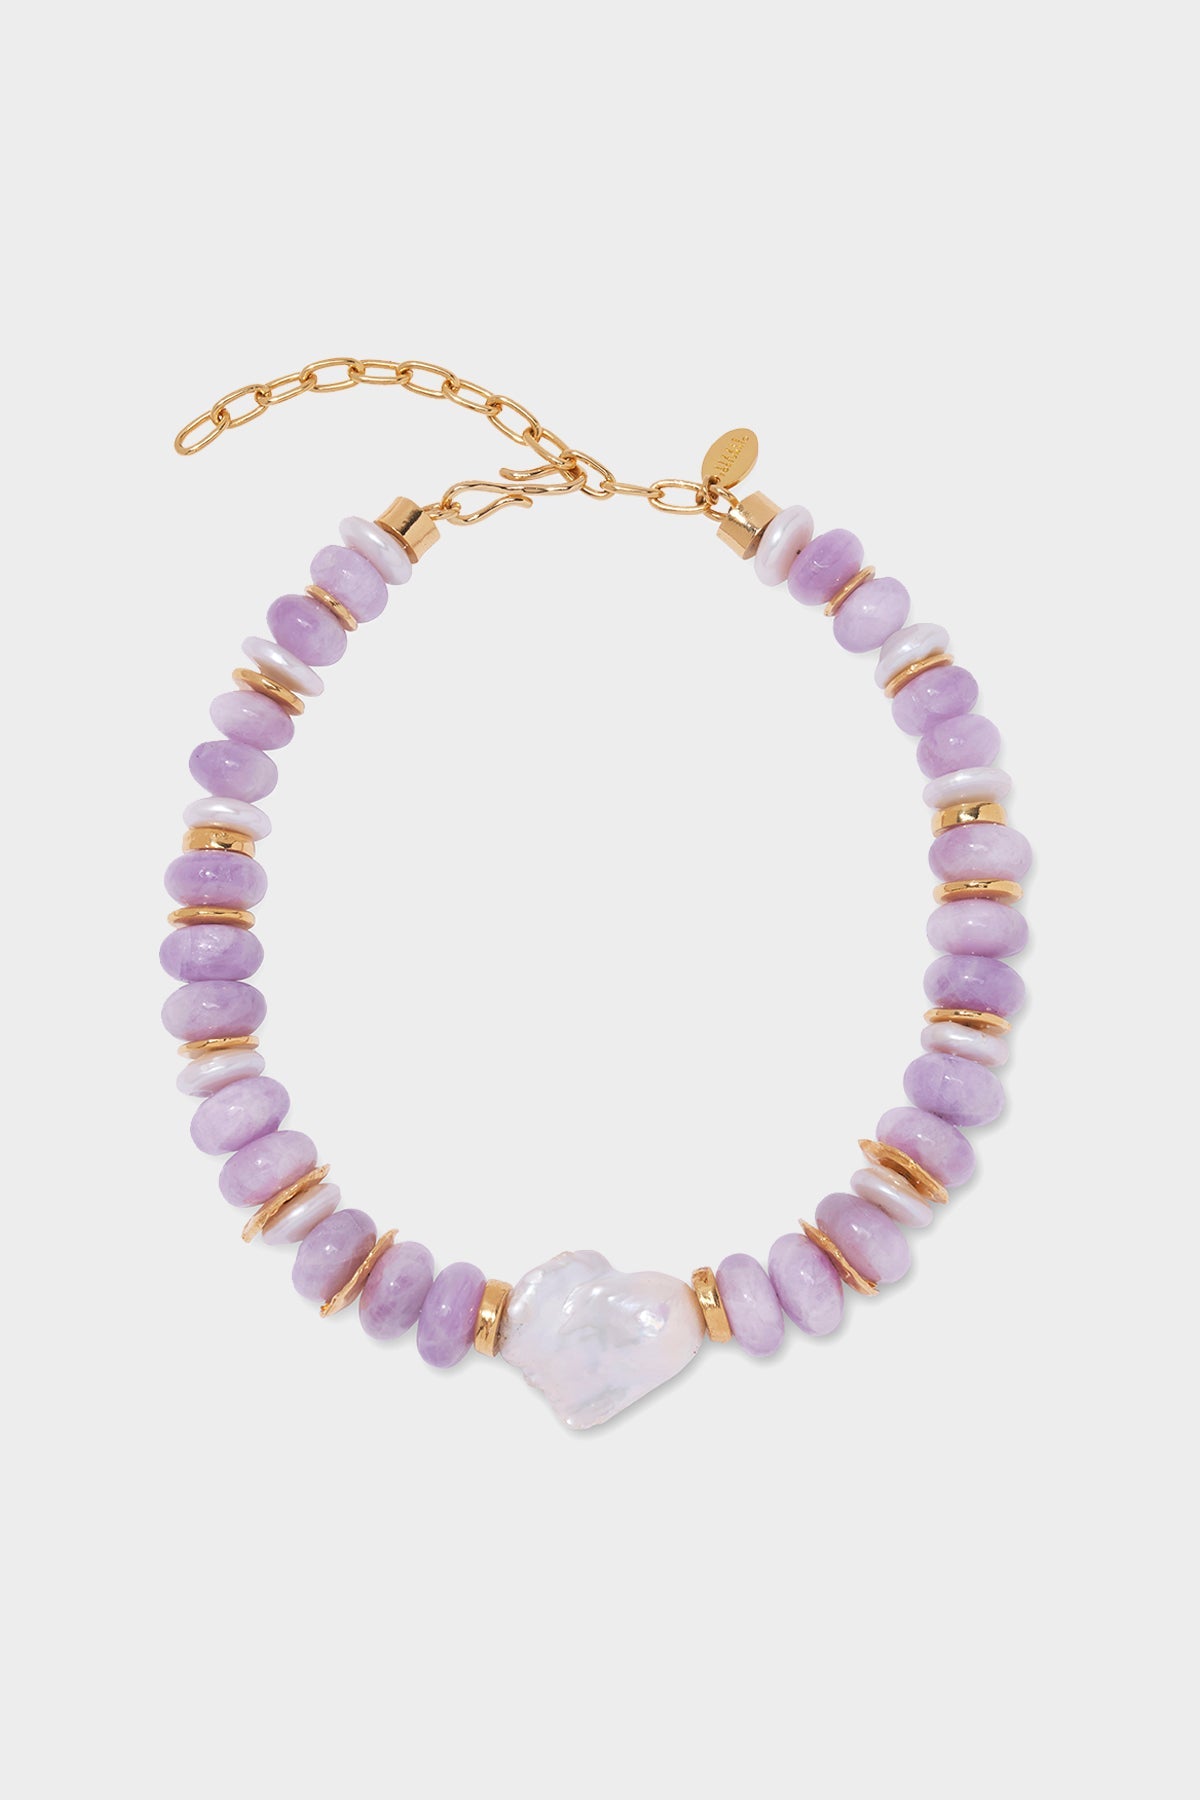 Provence II Necklace in Lavender - shop-olivia.com